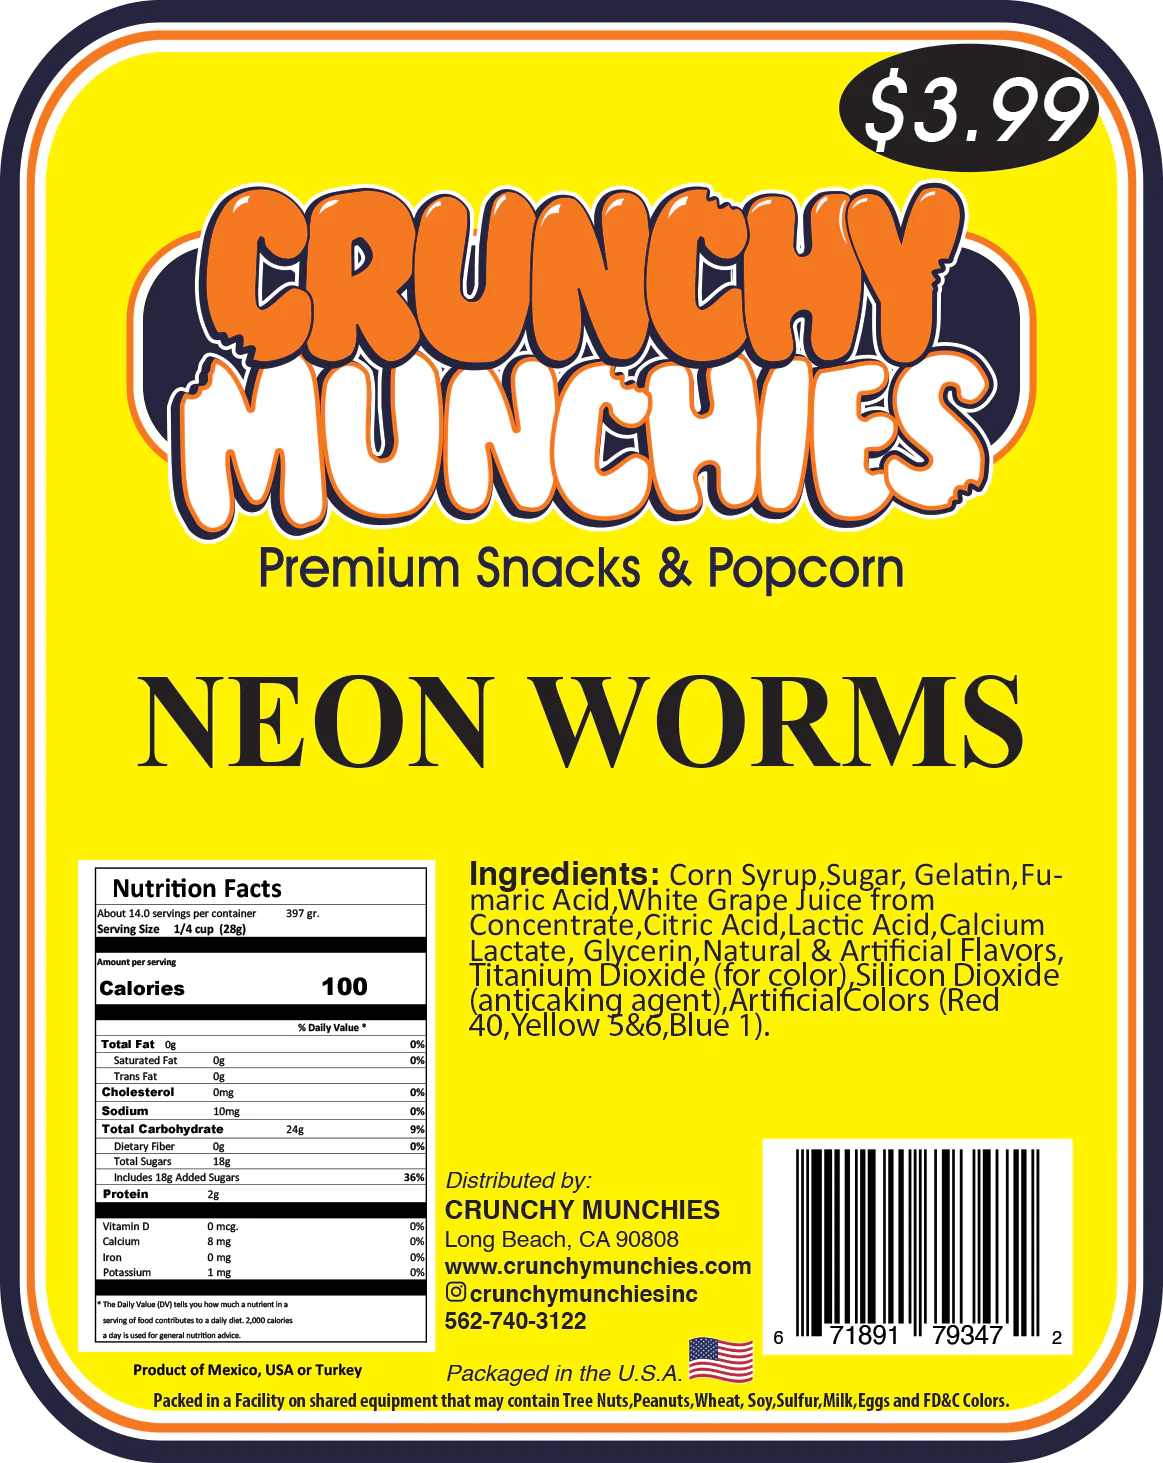 Neon Worms- Crunchy Munchies